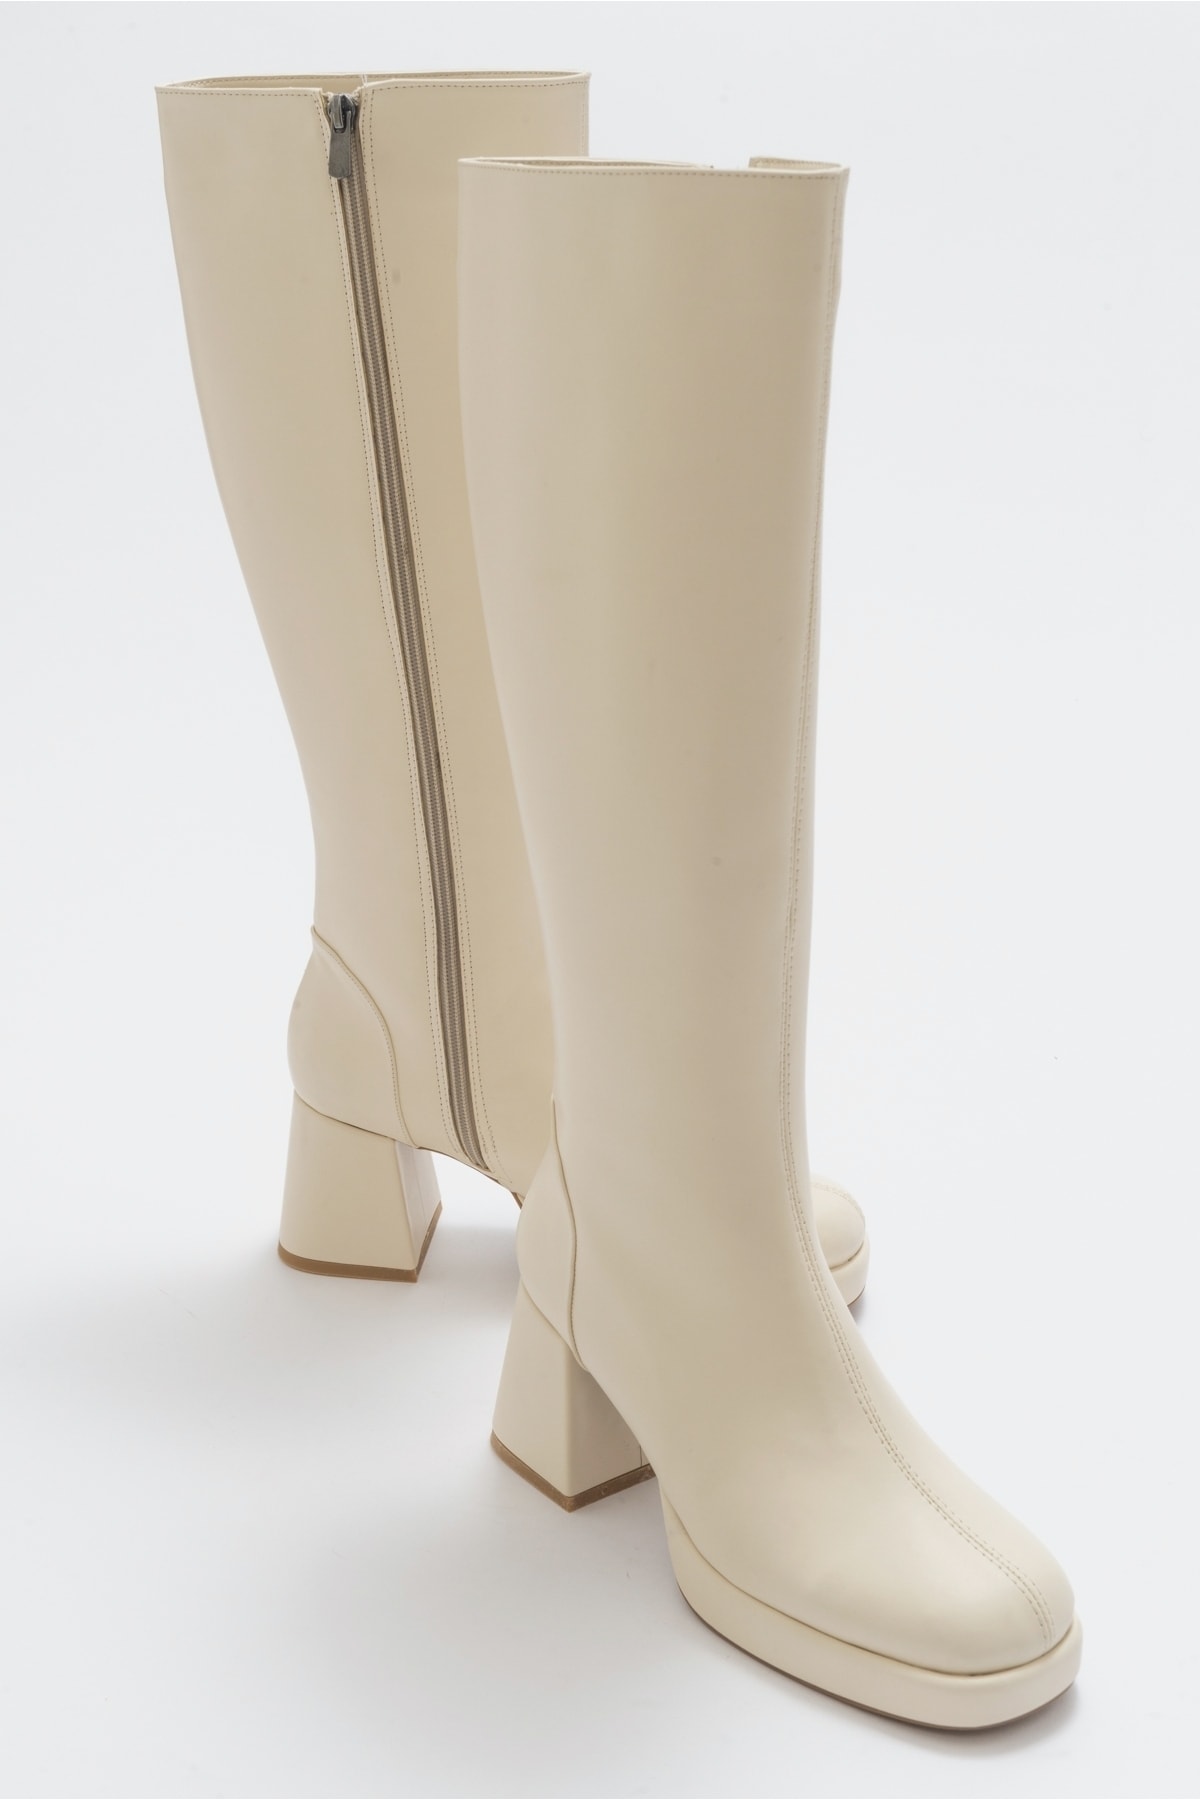 LuviShoes Noote Beige Skin Women's Boots